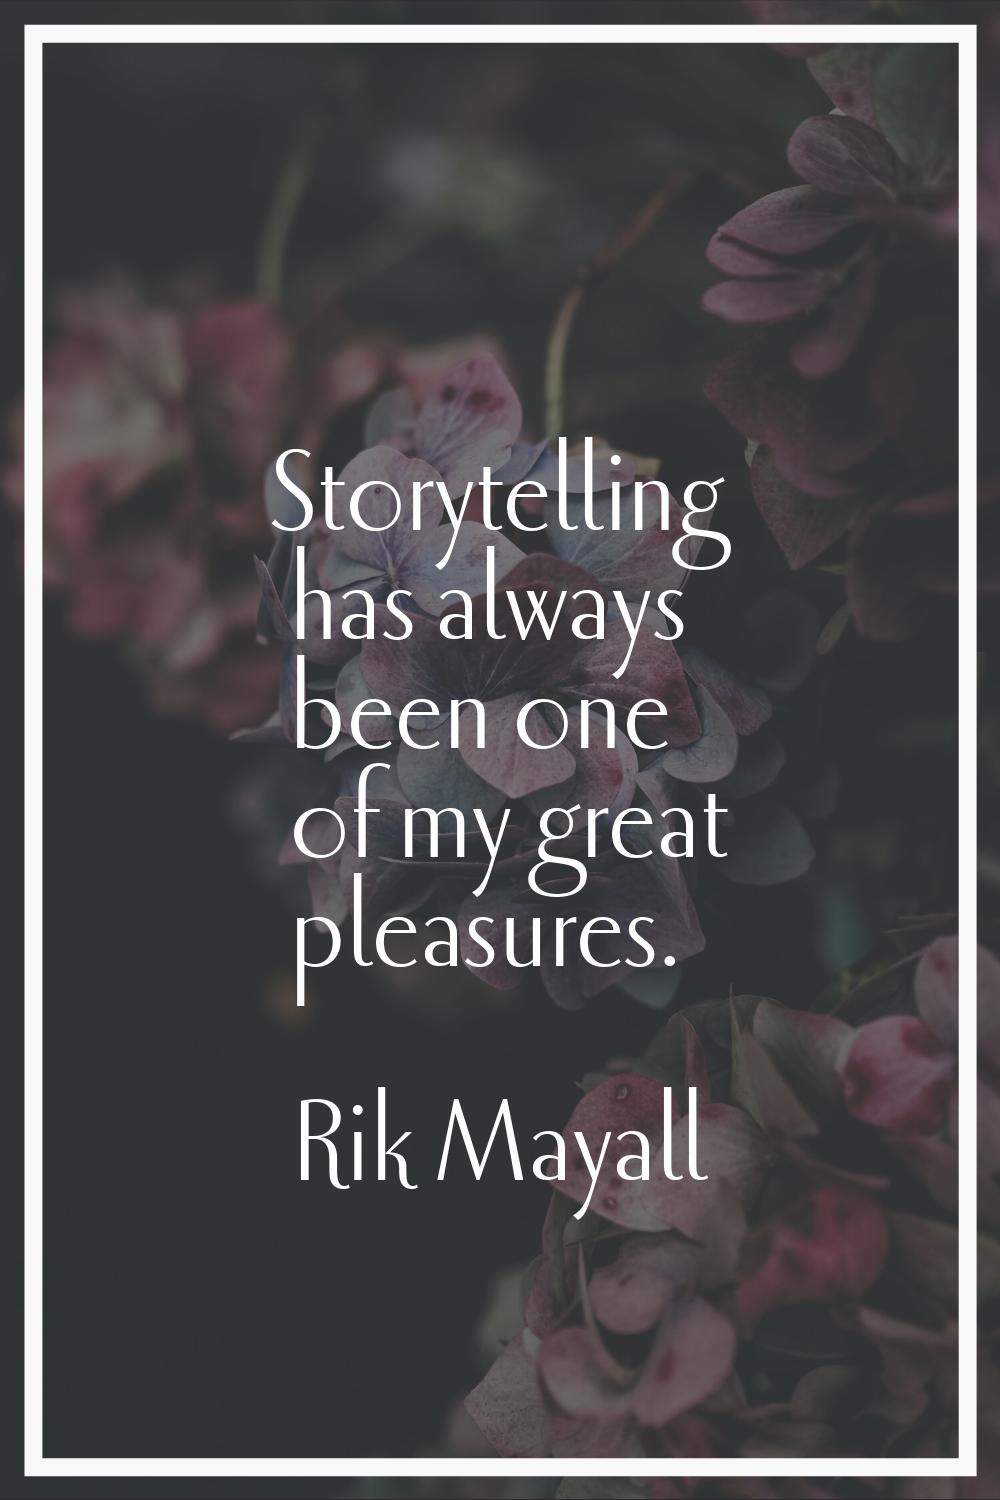 Storytelling has always been one of my great pleasures.